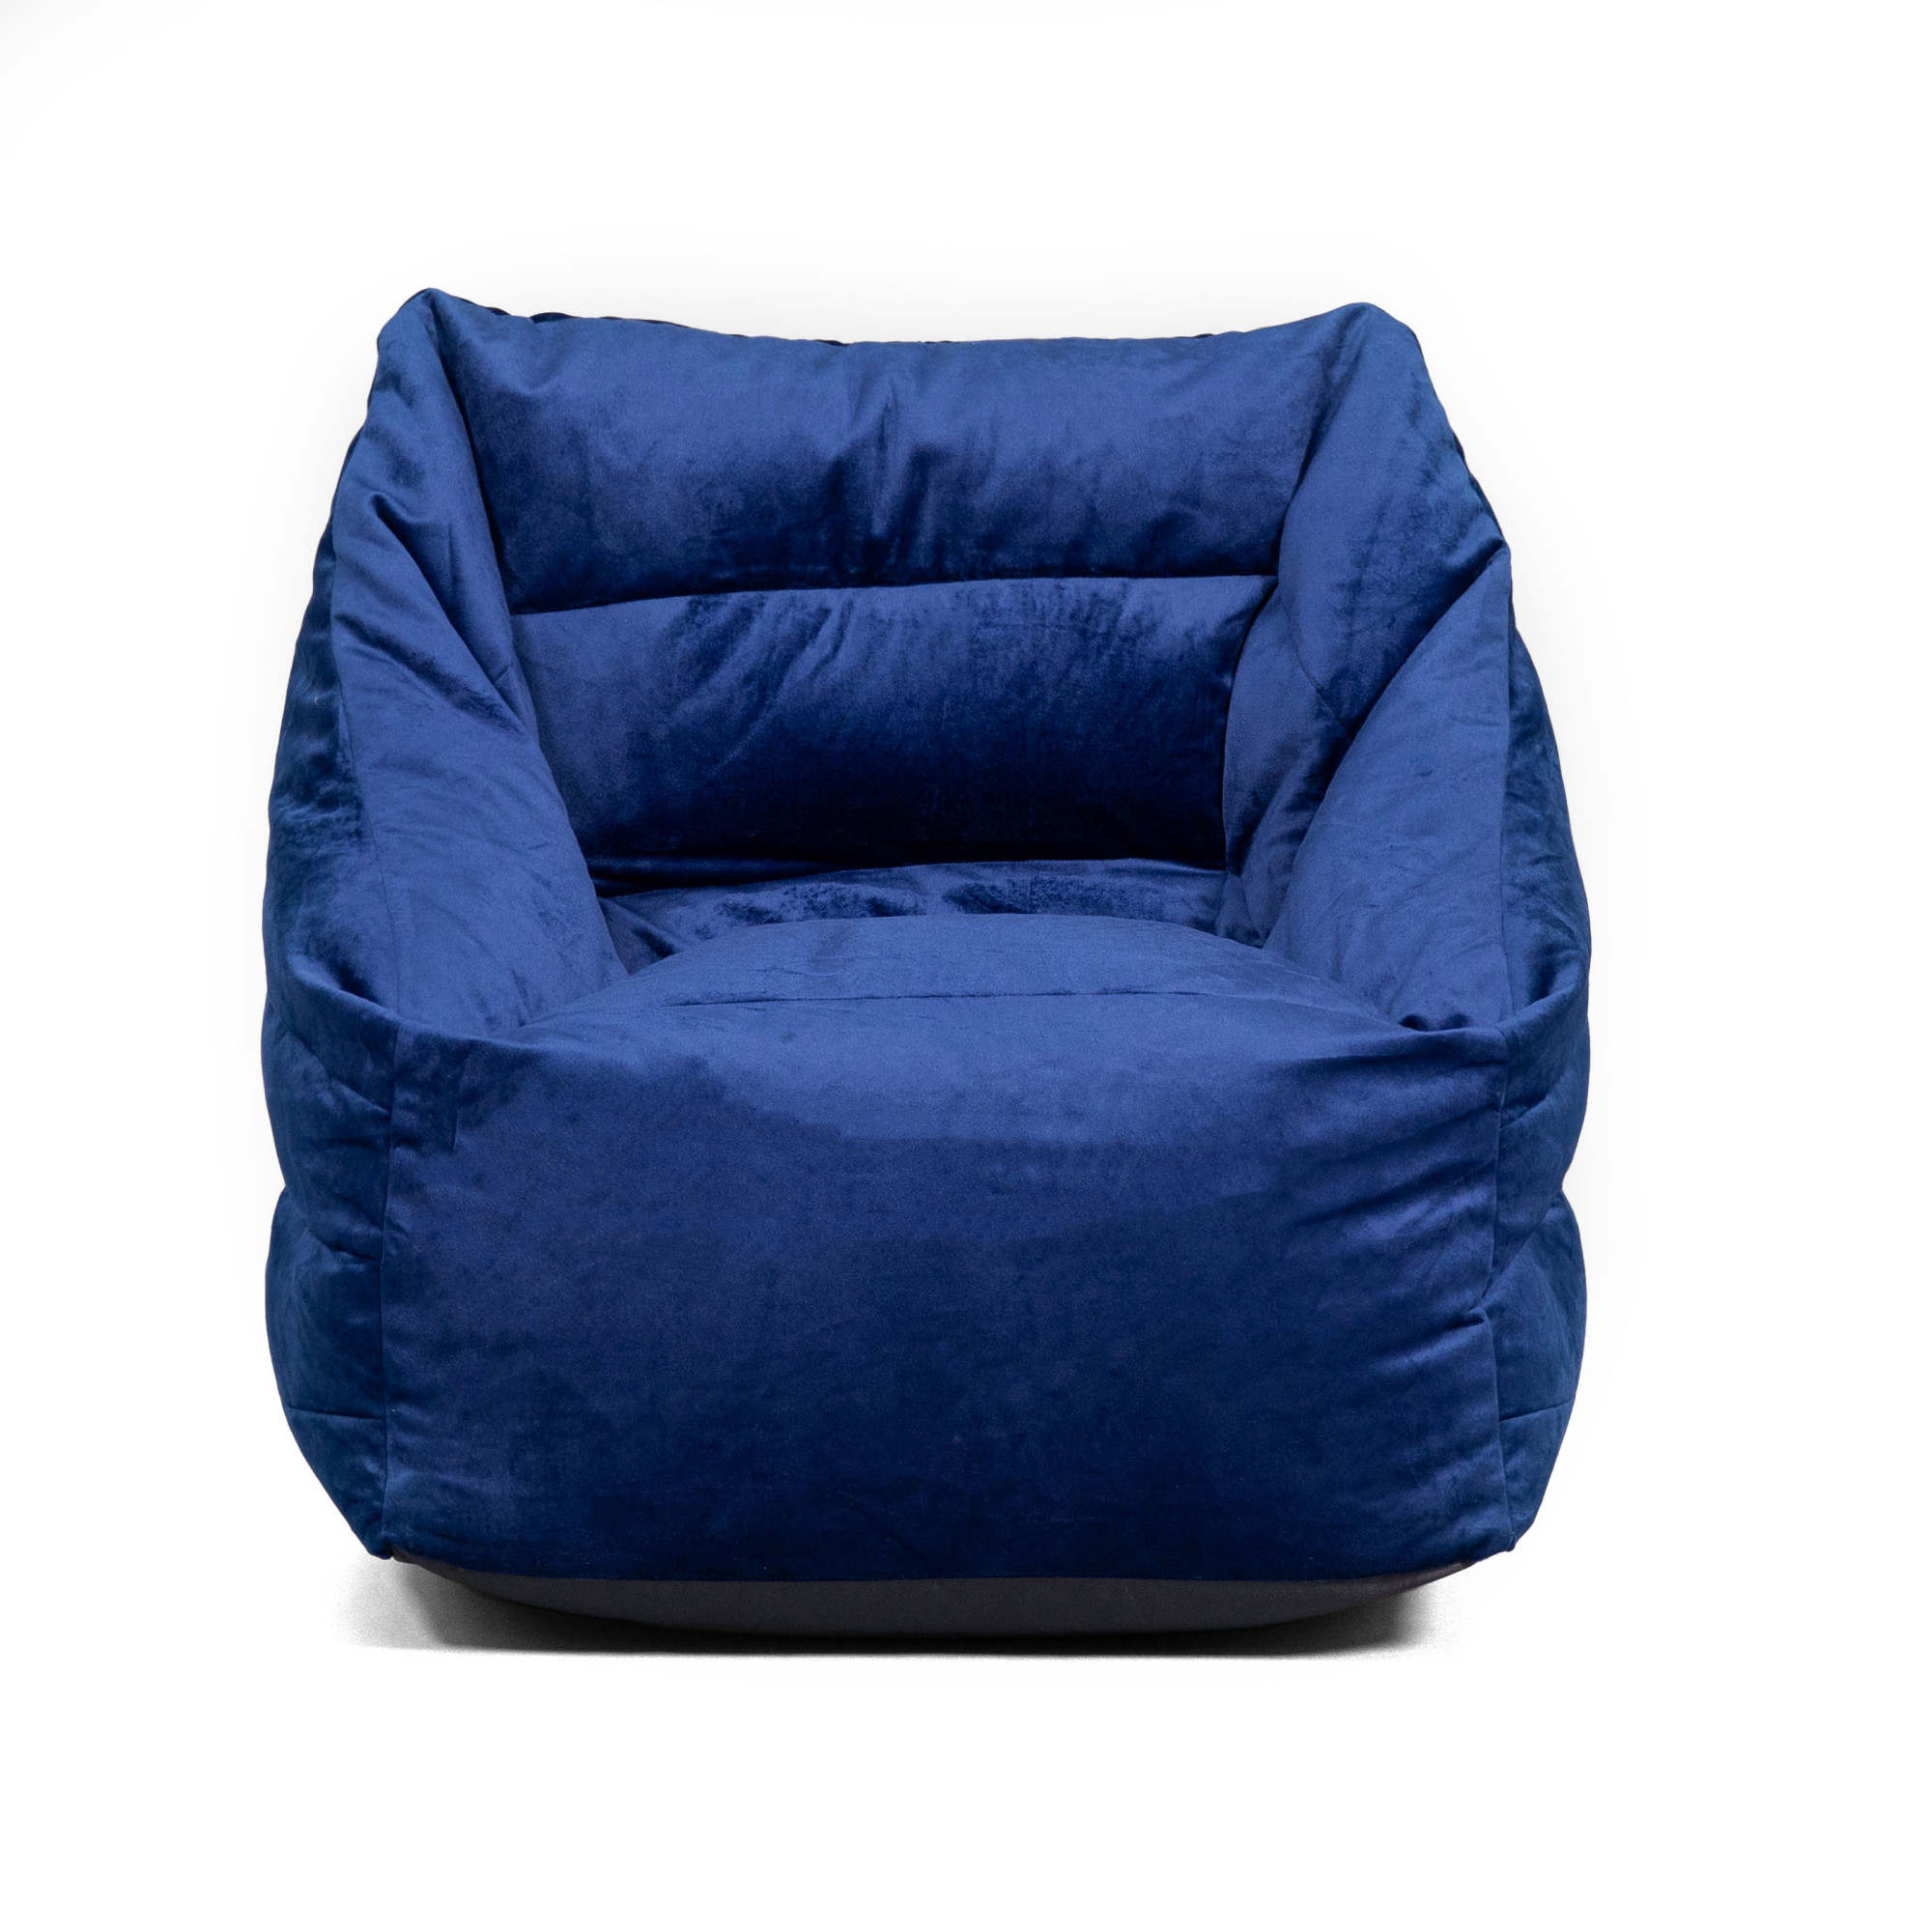 Big Joe Aurora Bean Bag Chair, Deep Navy Velvet, Soft Polyester, 2.5 feet - image 1 of 6